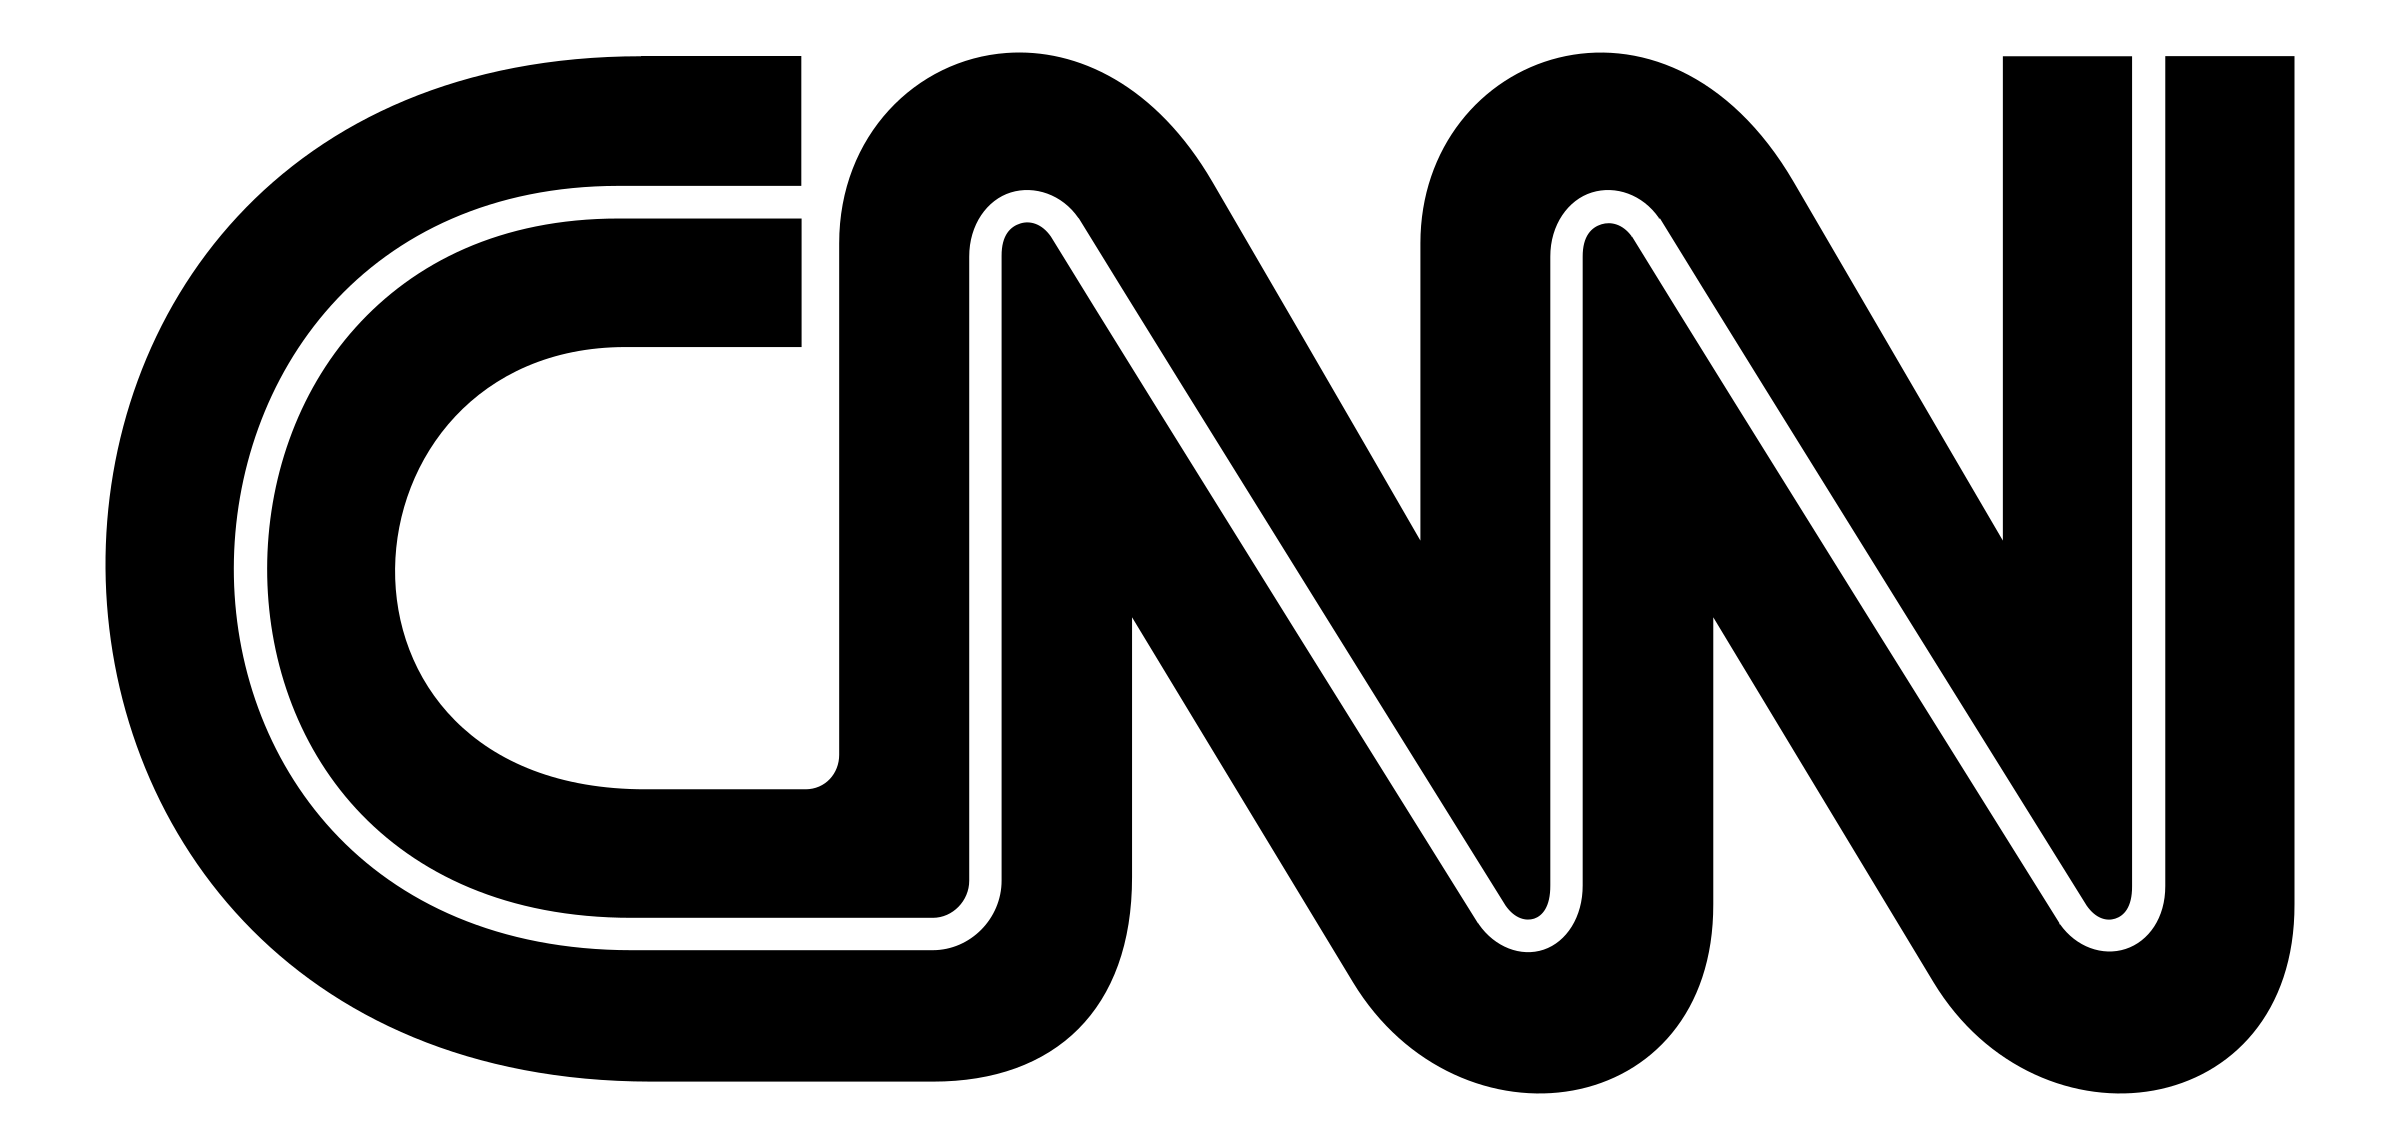 cnn-logo-black-transparent